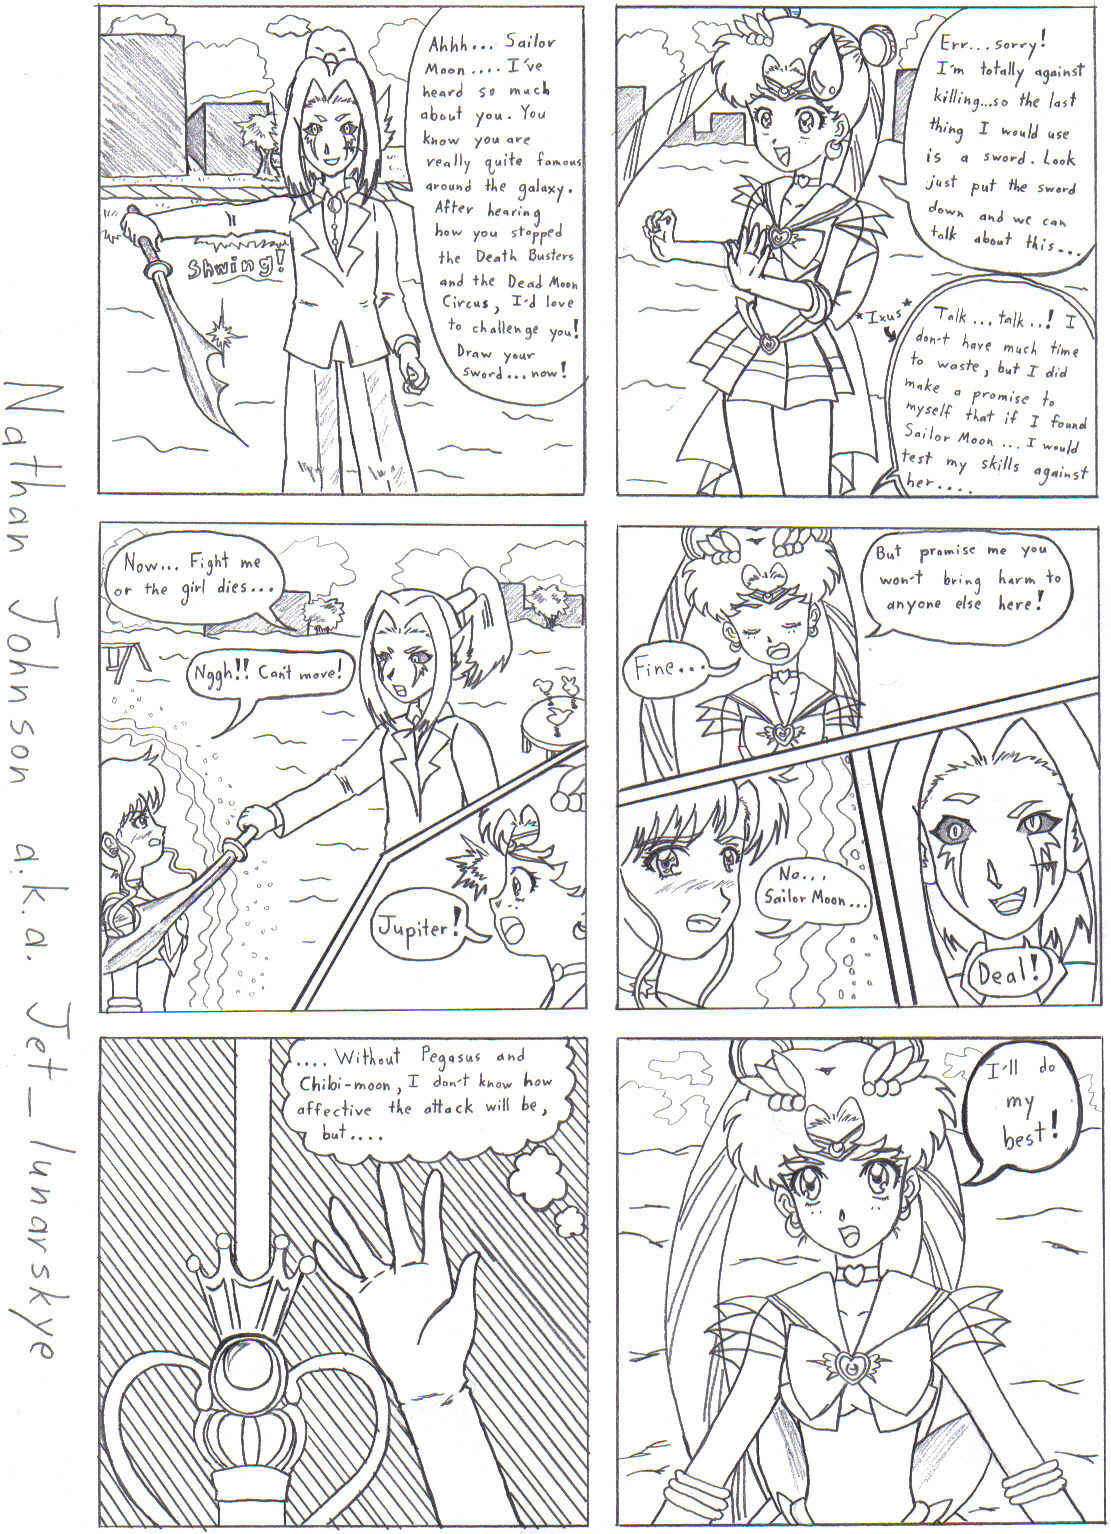 A Soldier's love: Page 9 by Jet_lunarskye